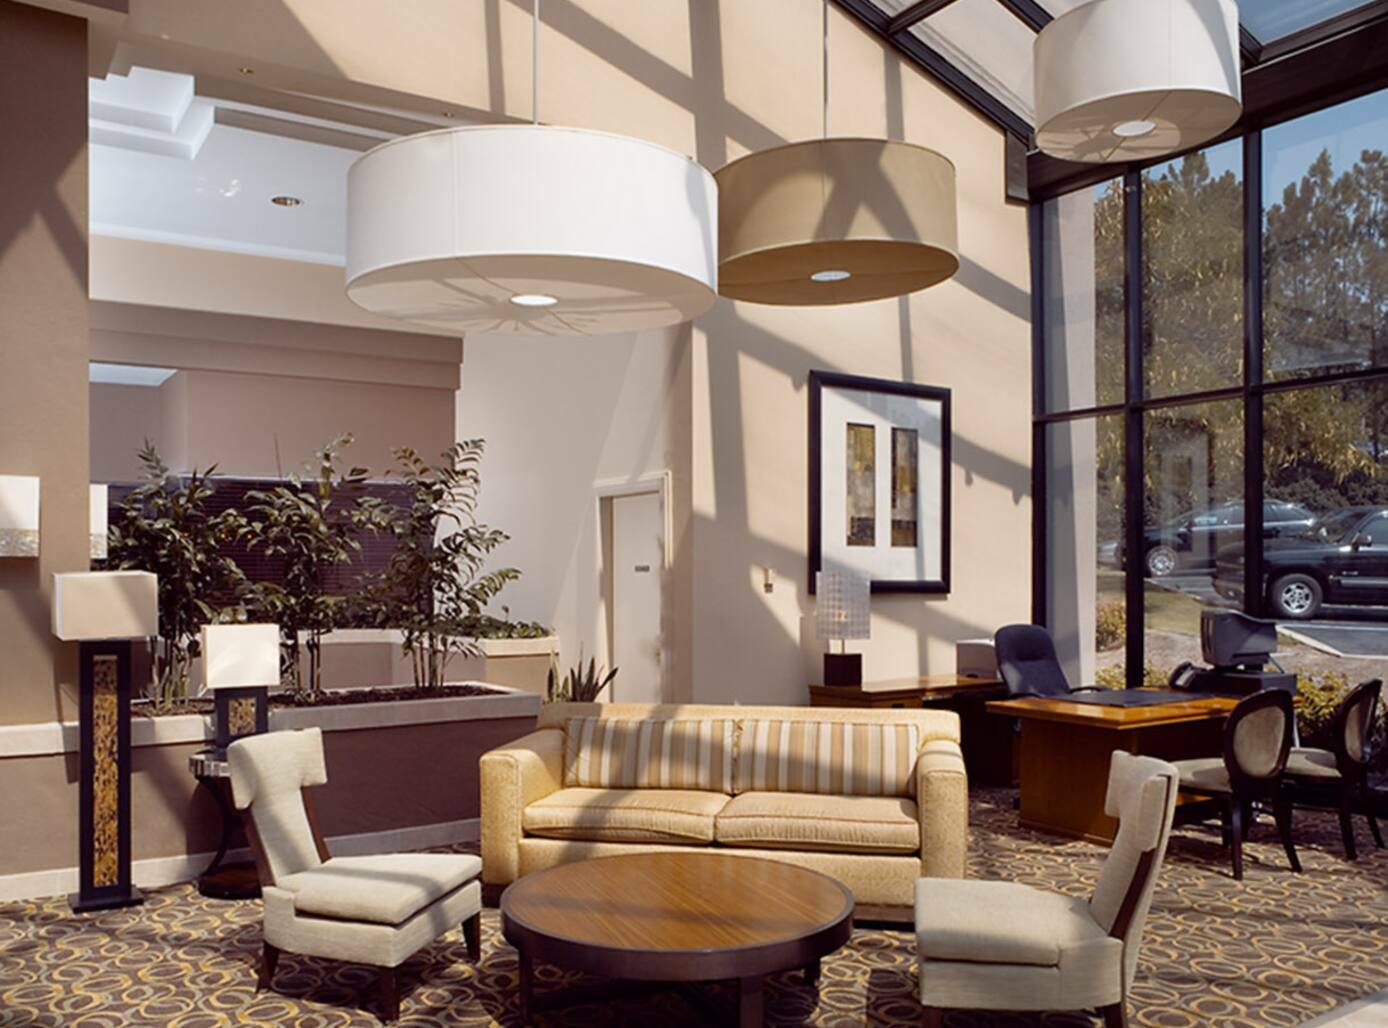 Photo of Embassy Suites by Hilton Birmingham, Birmingham, AL